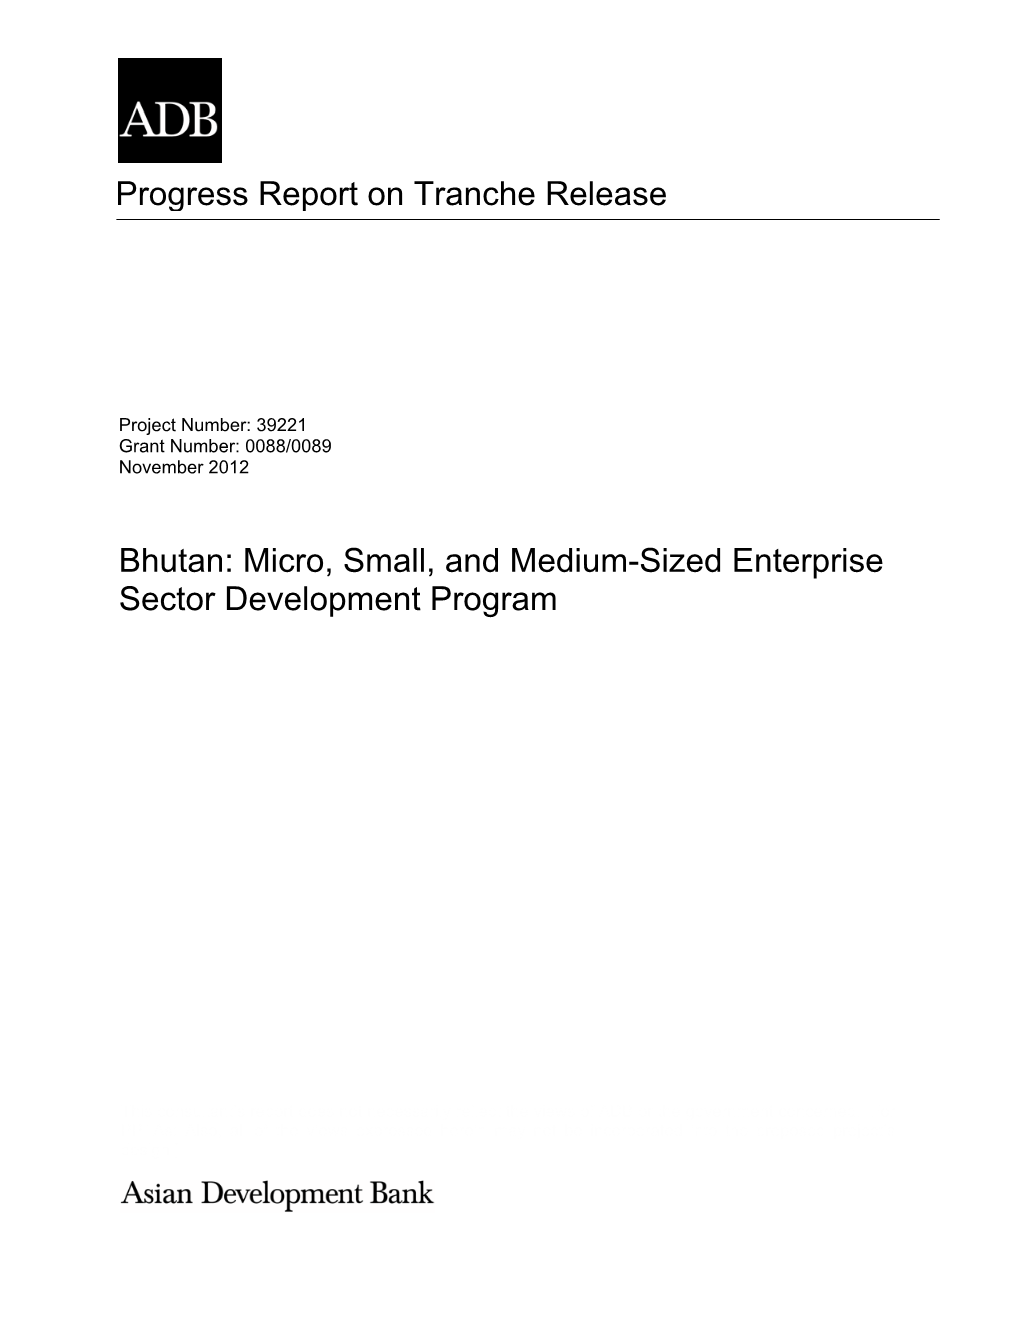 Bhutan: Micro, Small, and Medium-Sized Enterprise Sector Development Program